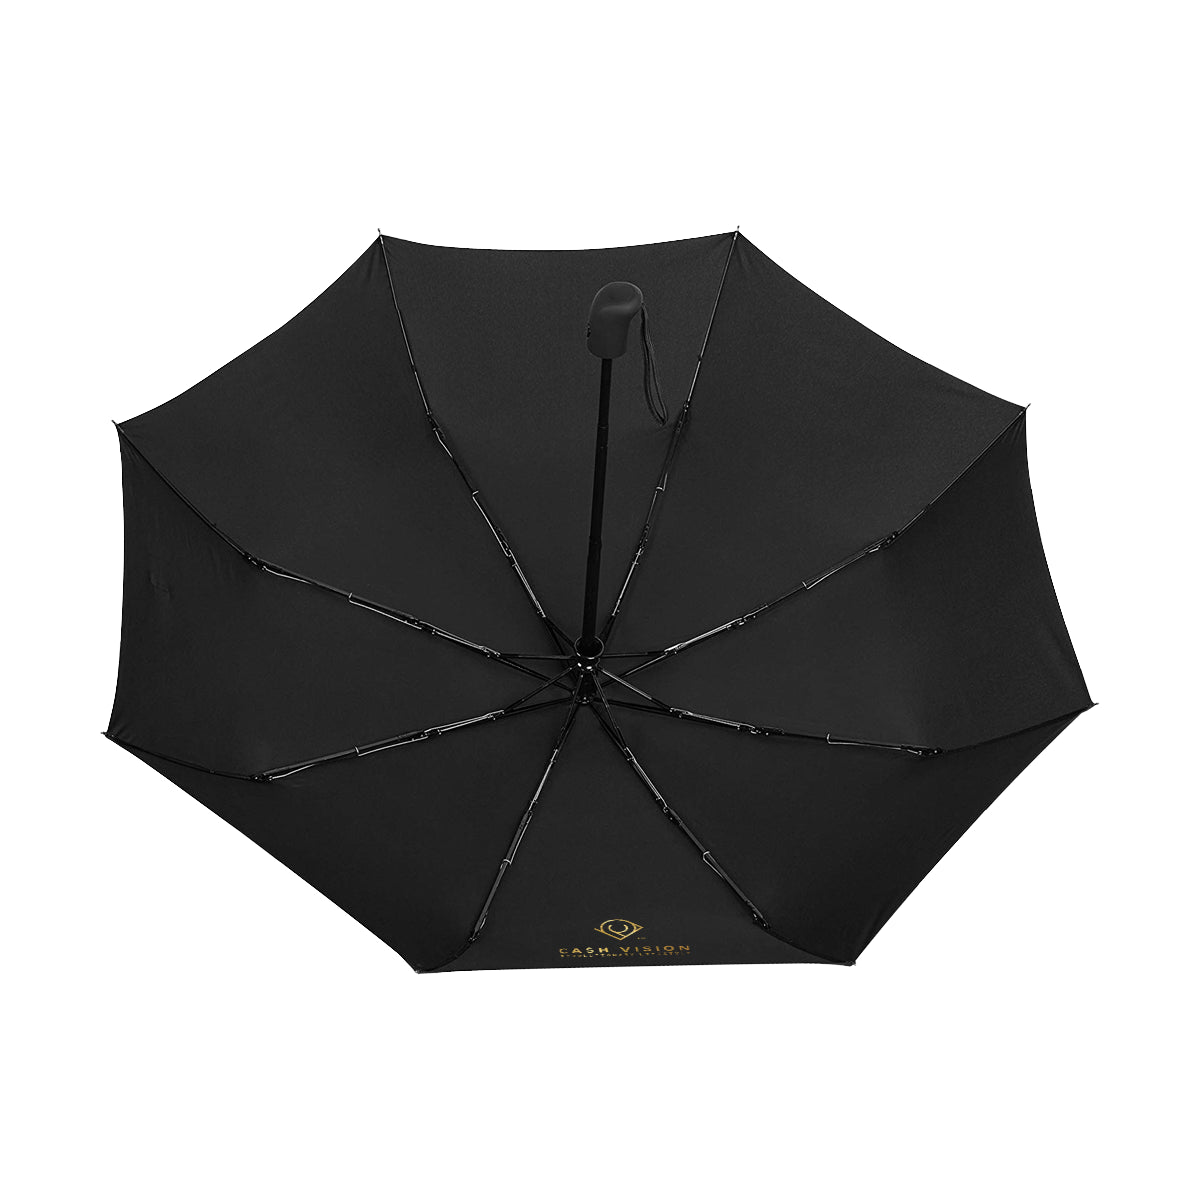 Cash Vision Anti-UV Auto-Fordable Umbrella - Black